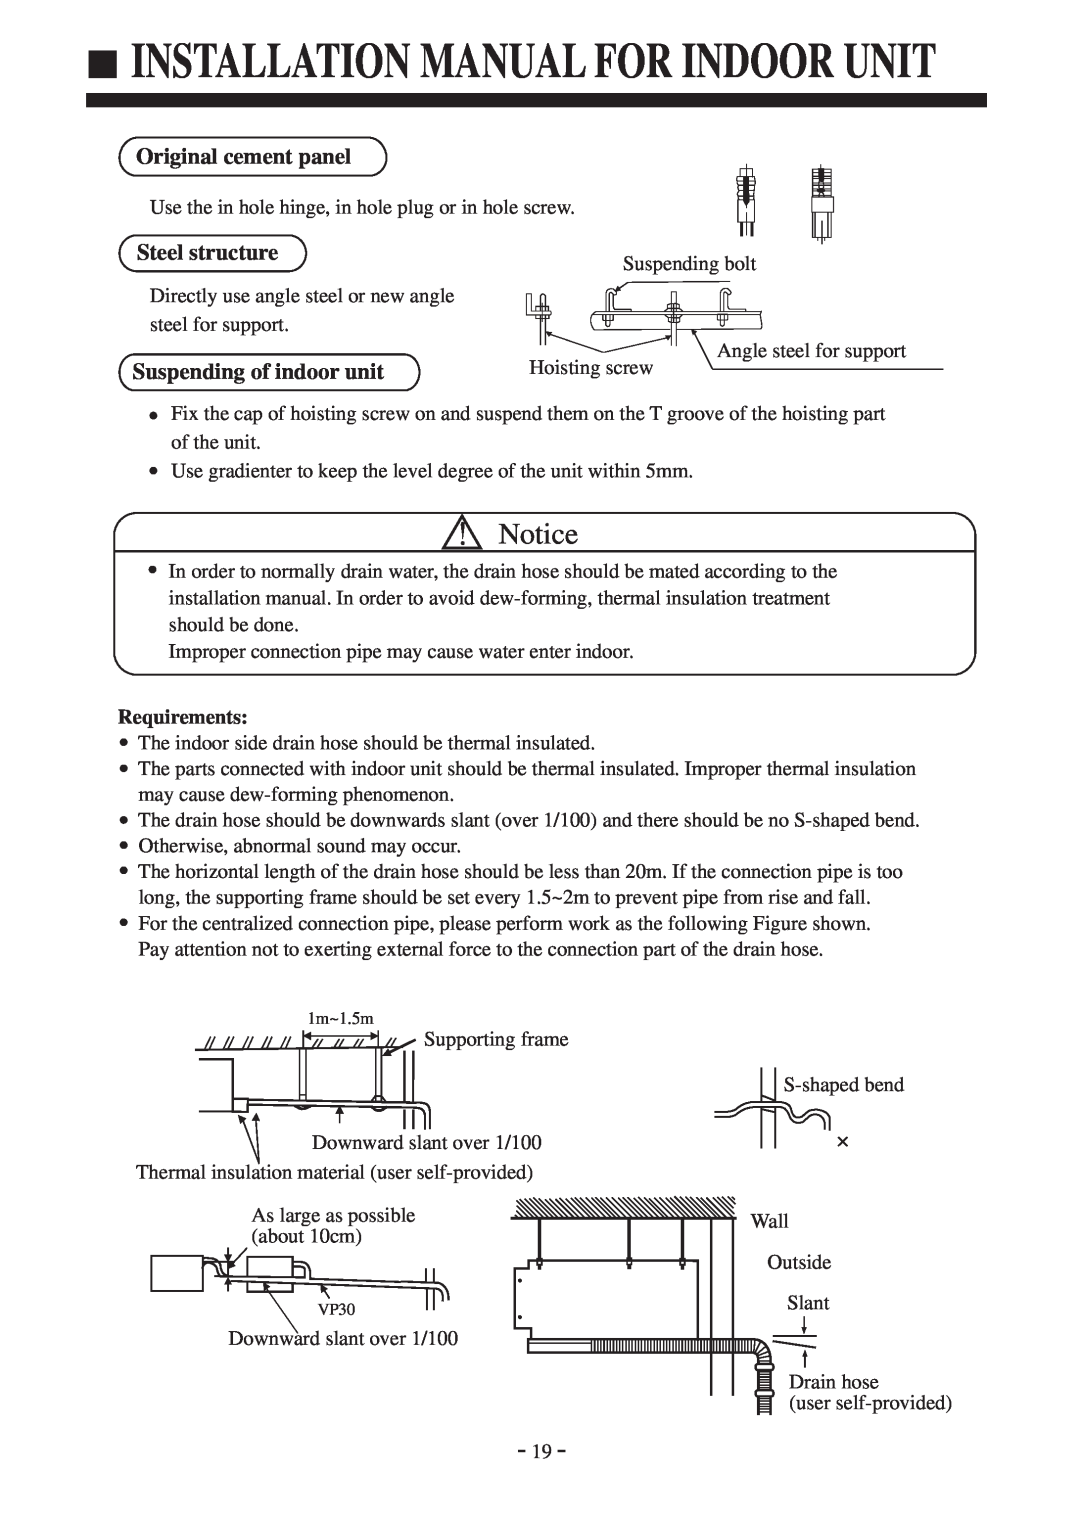 Haier AD142AMBIA Installation Manual For Indoor Unit, Original cement panel, Steel structure, Suspending of indoor unit 